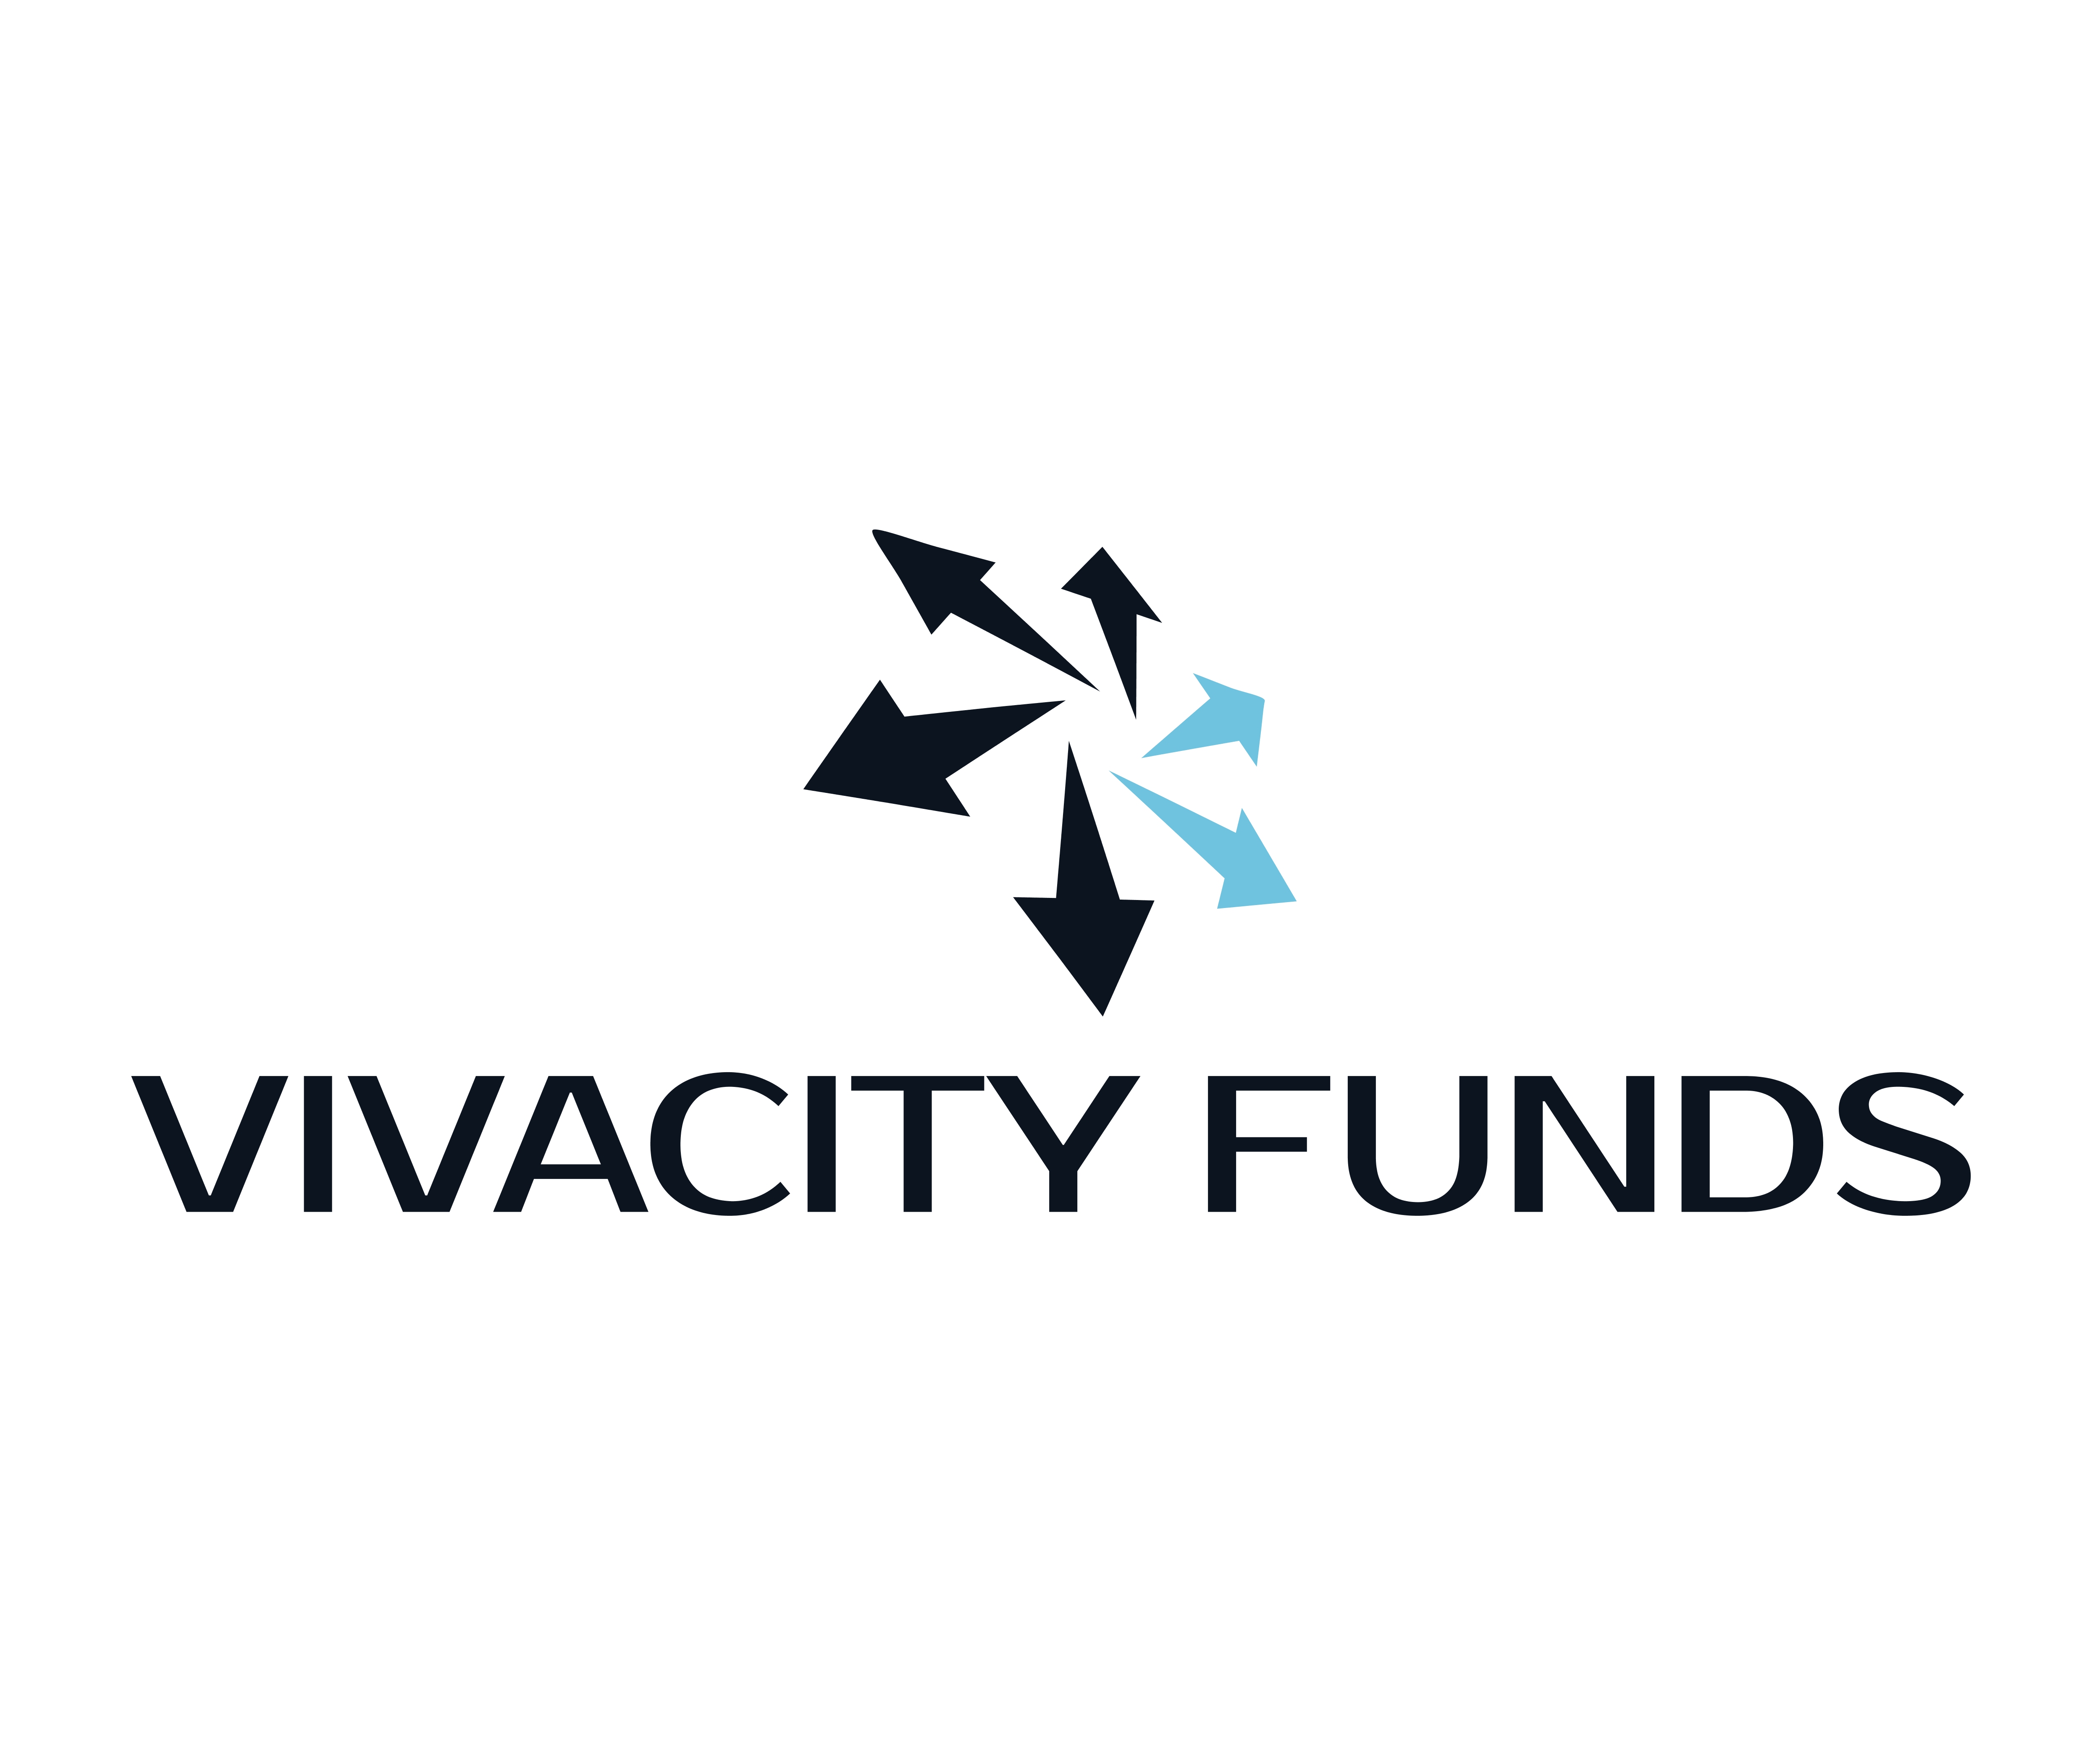 Vivacity Funds JGL 1 Primary logo 5000